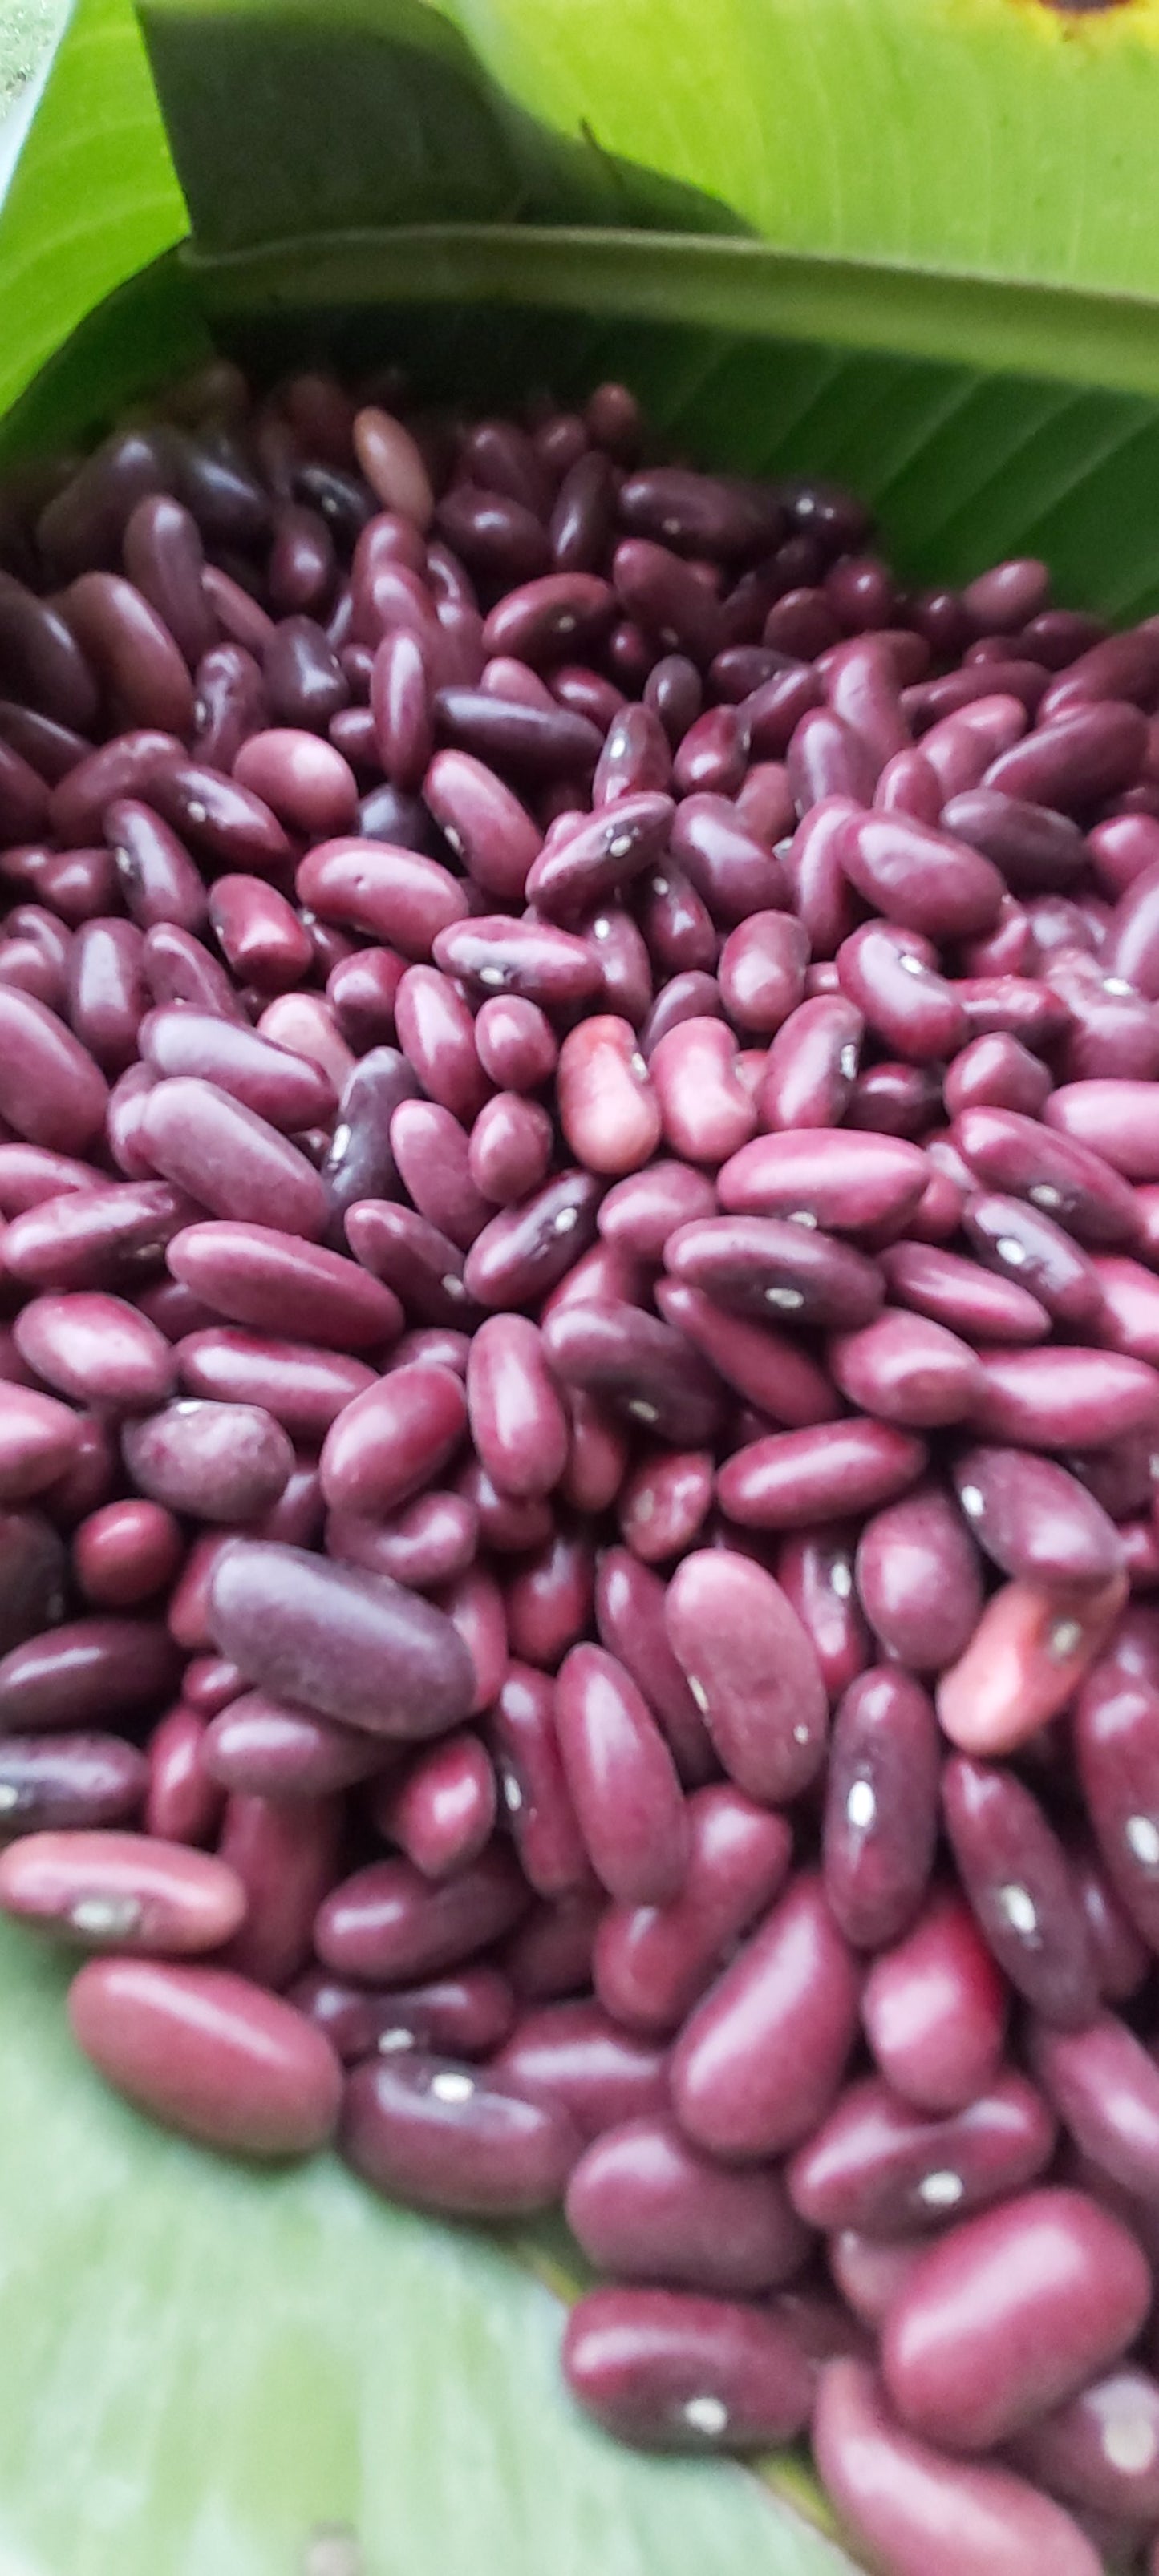 Beans, Red Kidney